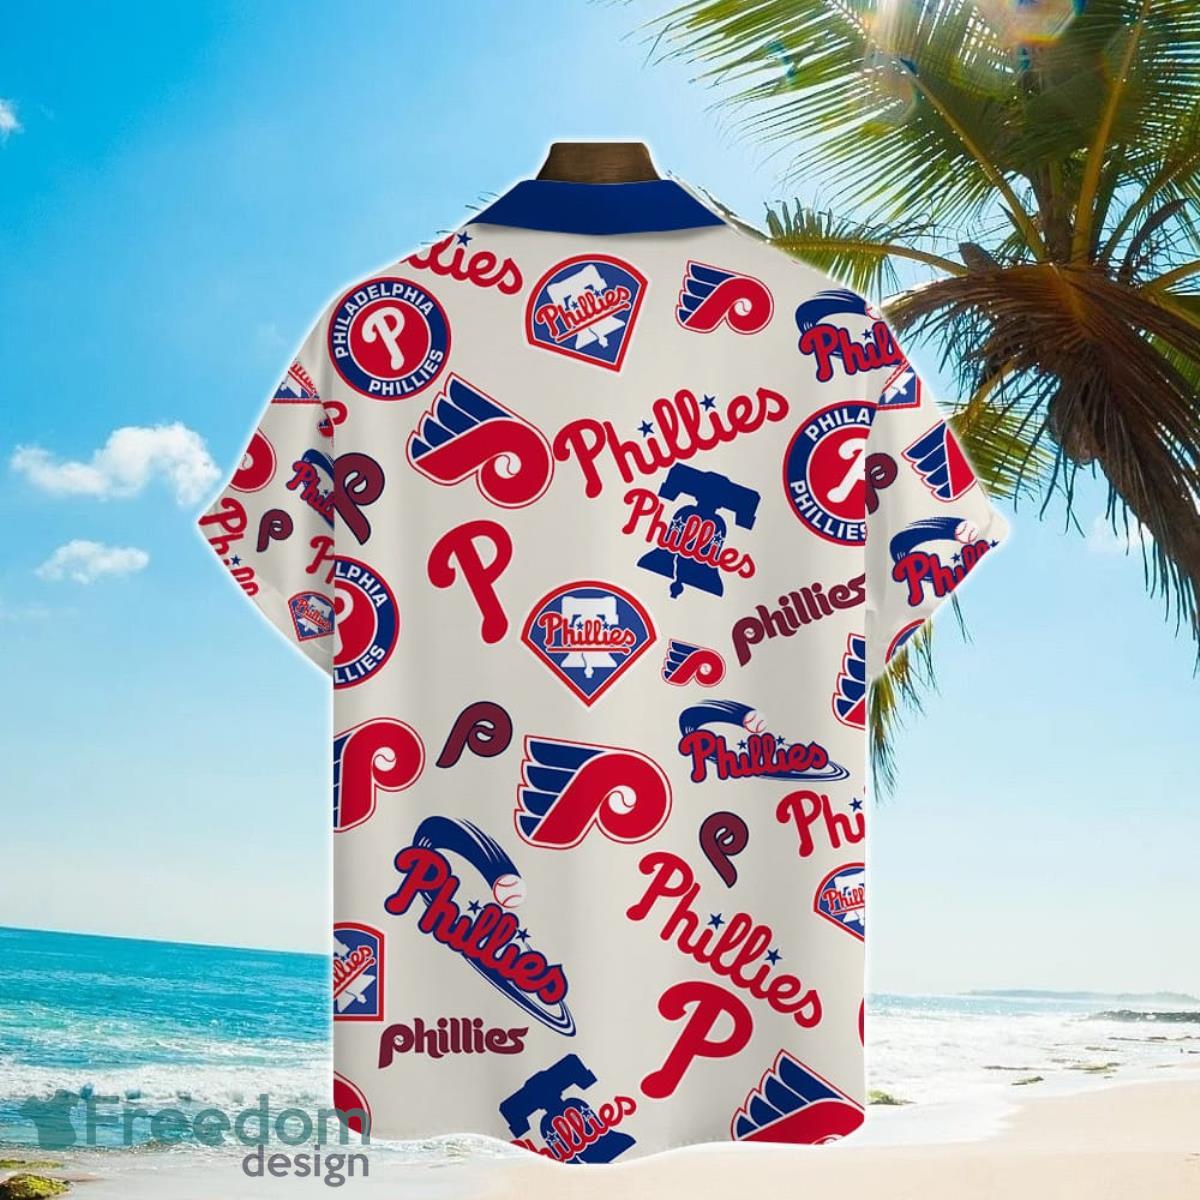 Philadelphia Phillies Major League Baseball Custom Name Baseball Jersey -  Freedomdesign